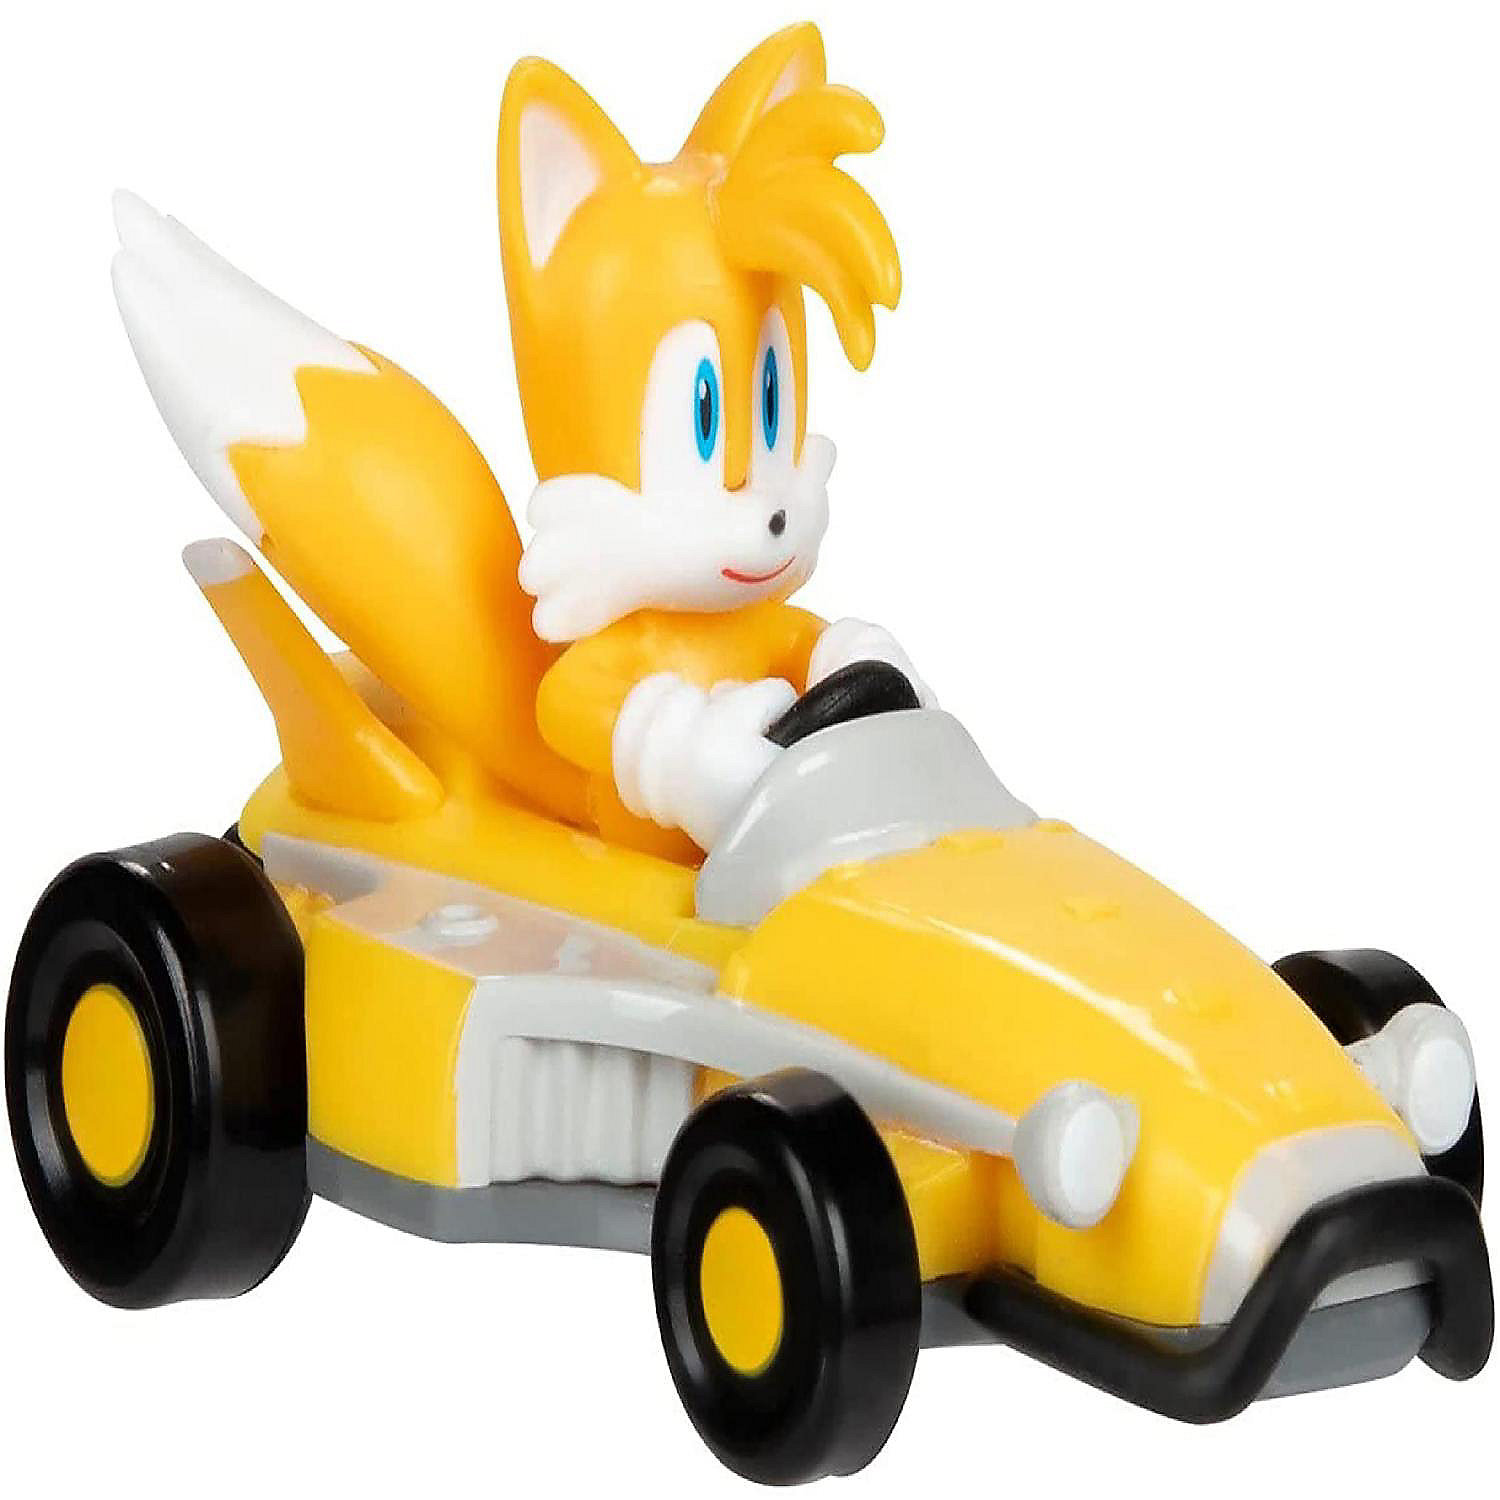 Oxideren Gezondheid pion Sonic the Hedgehog 1:64 Die-Cast Vehicle Tails | Oriental Trading